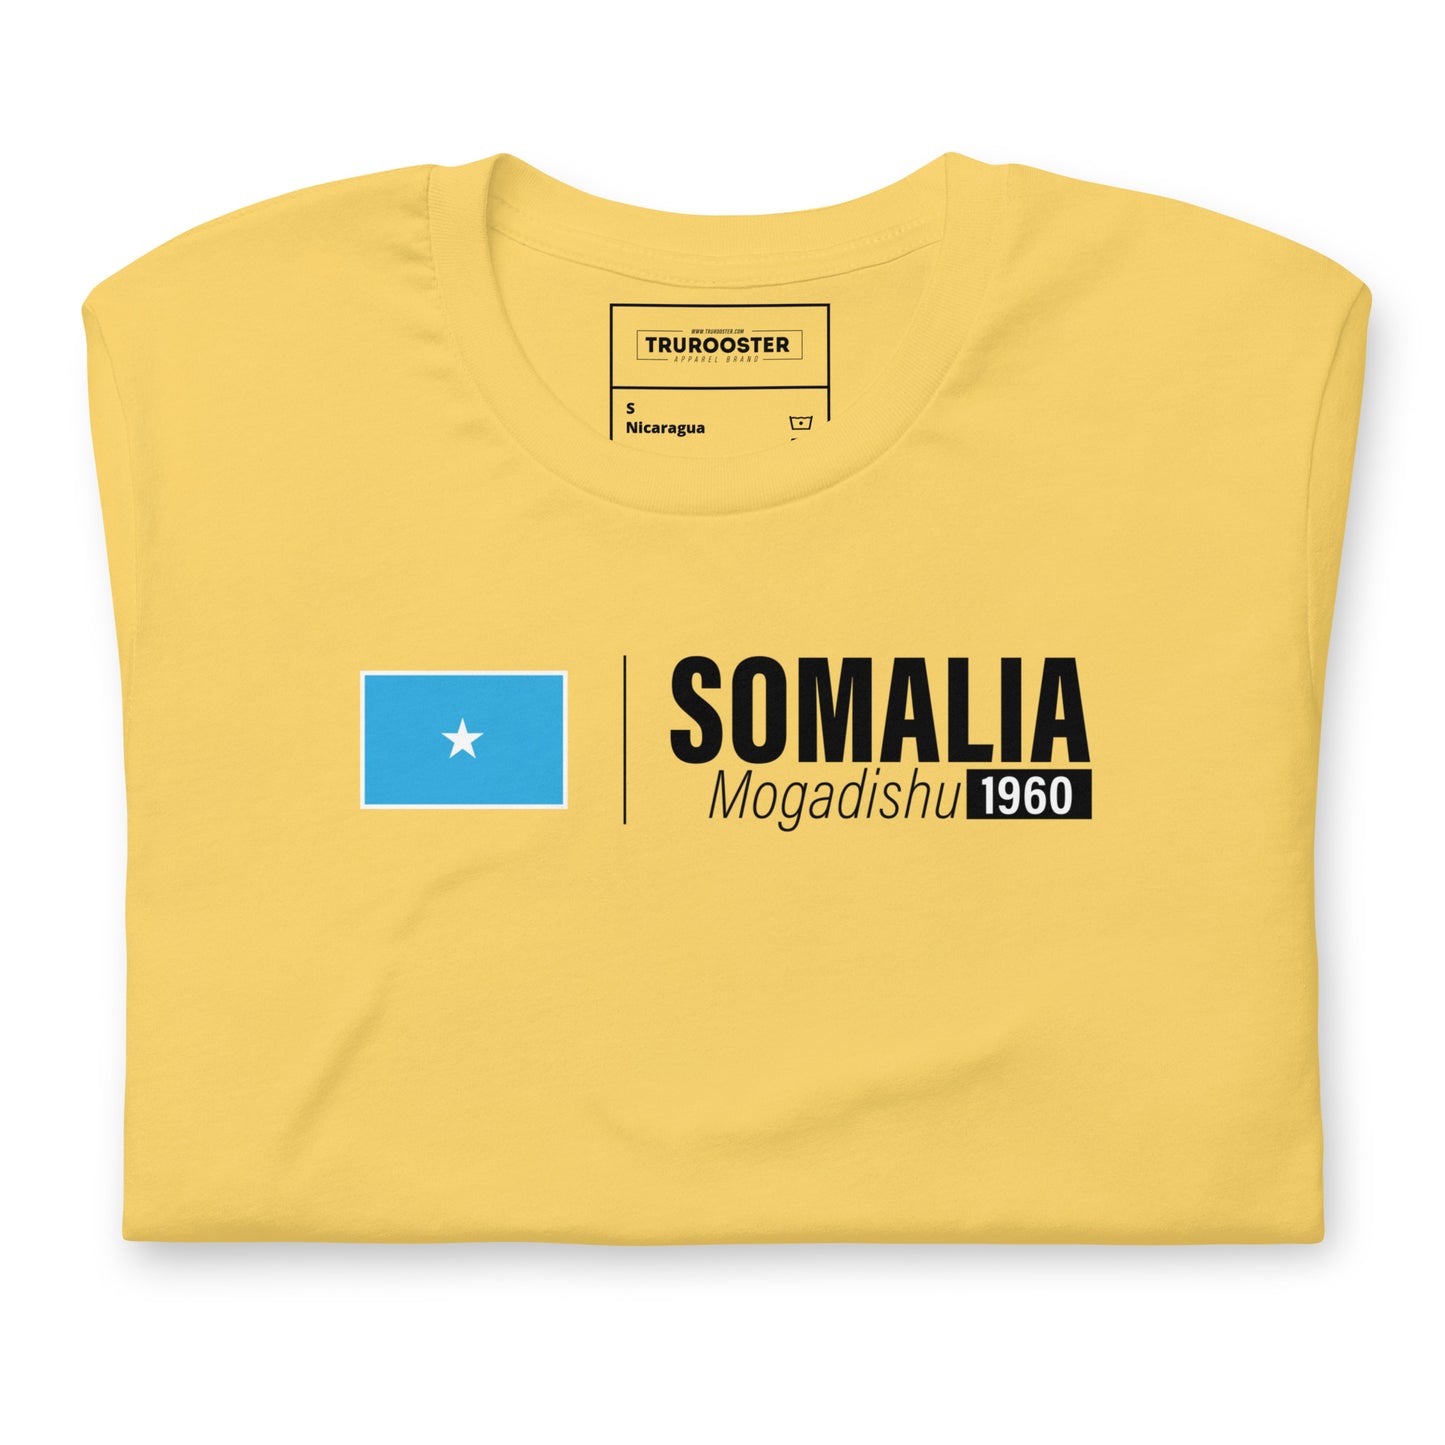 Somalia Mogadishu 1960 Unisex t-shirt